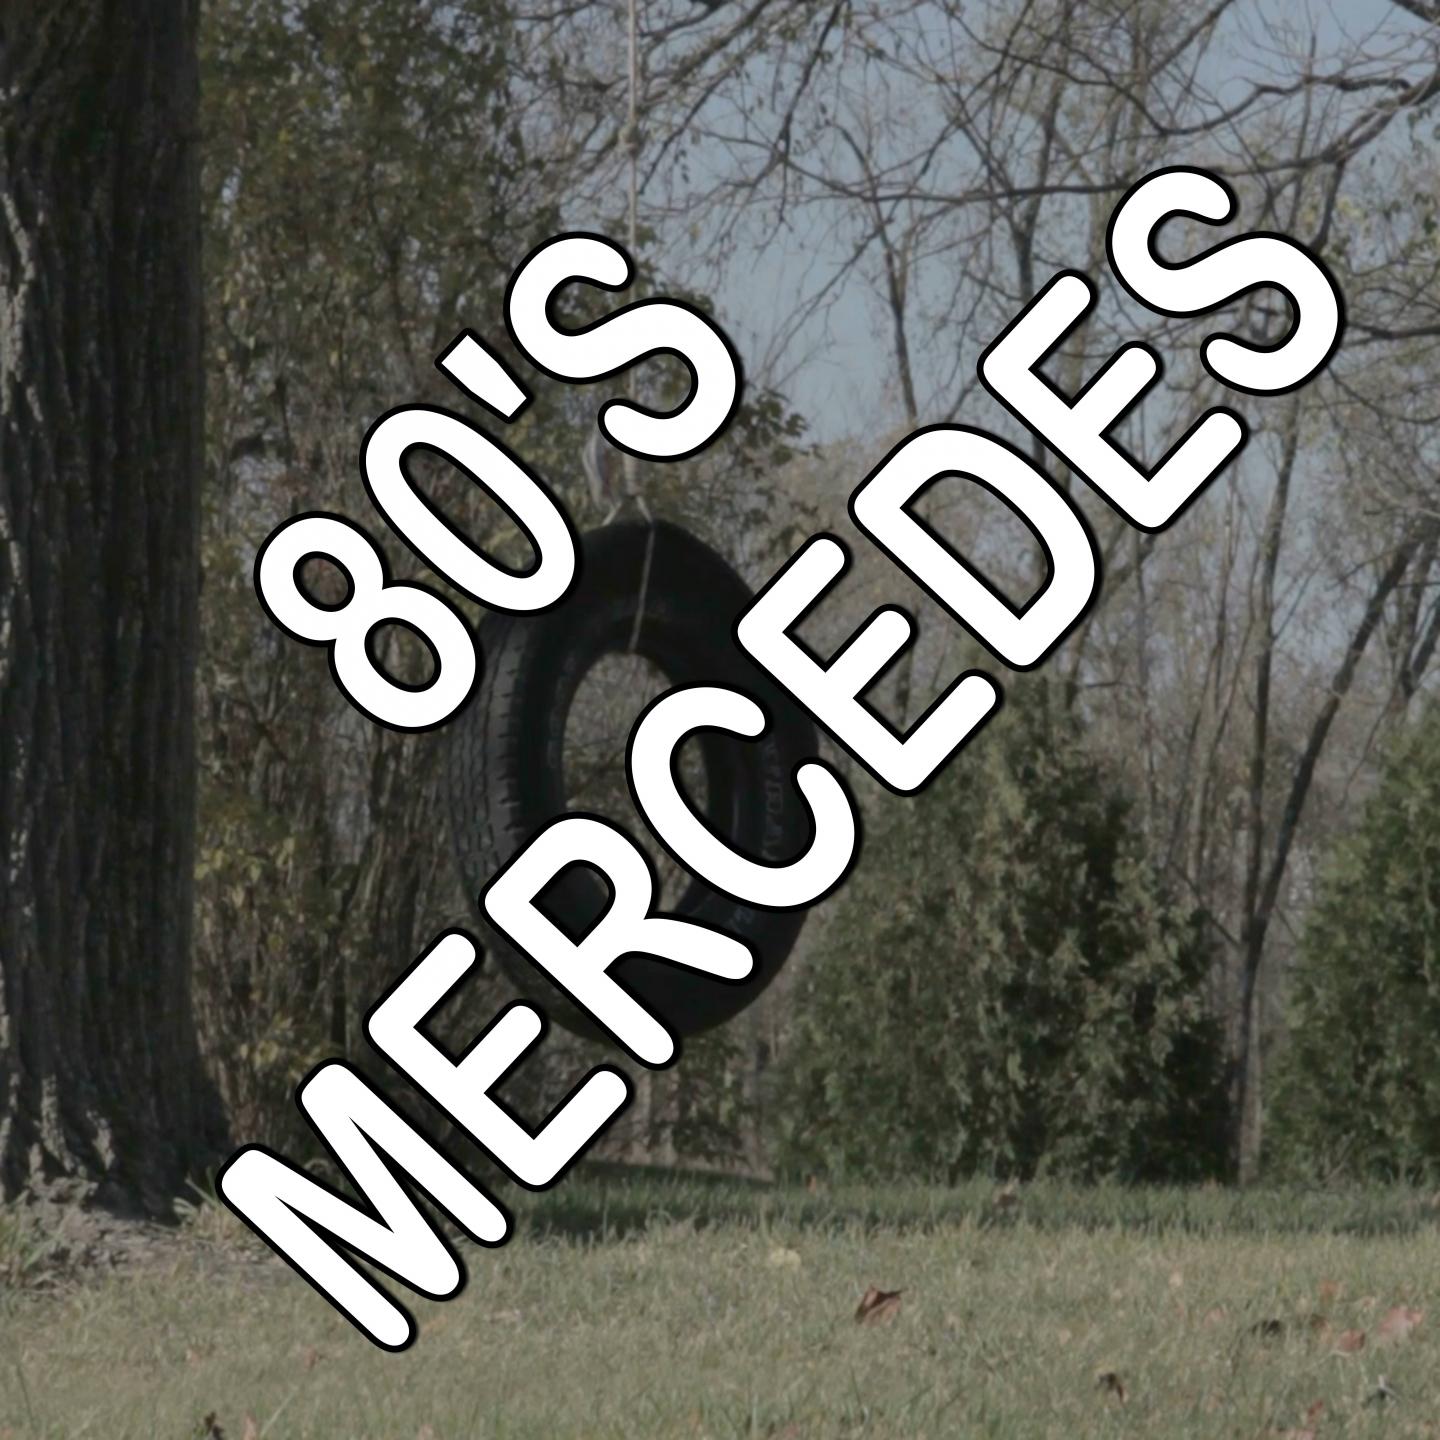 80's Mercedes - Tribute to Maren Morris